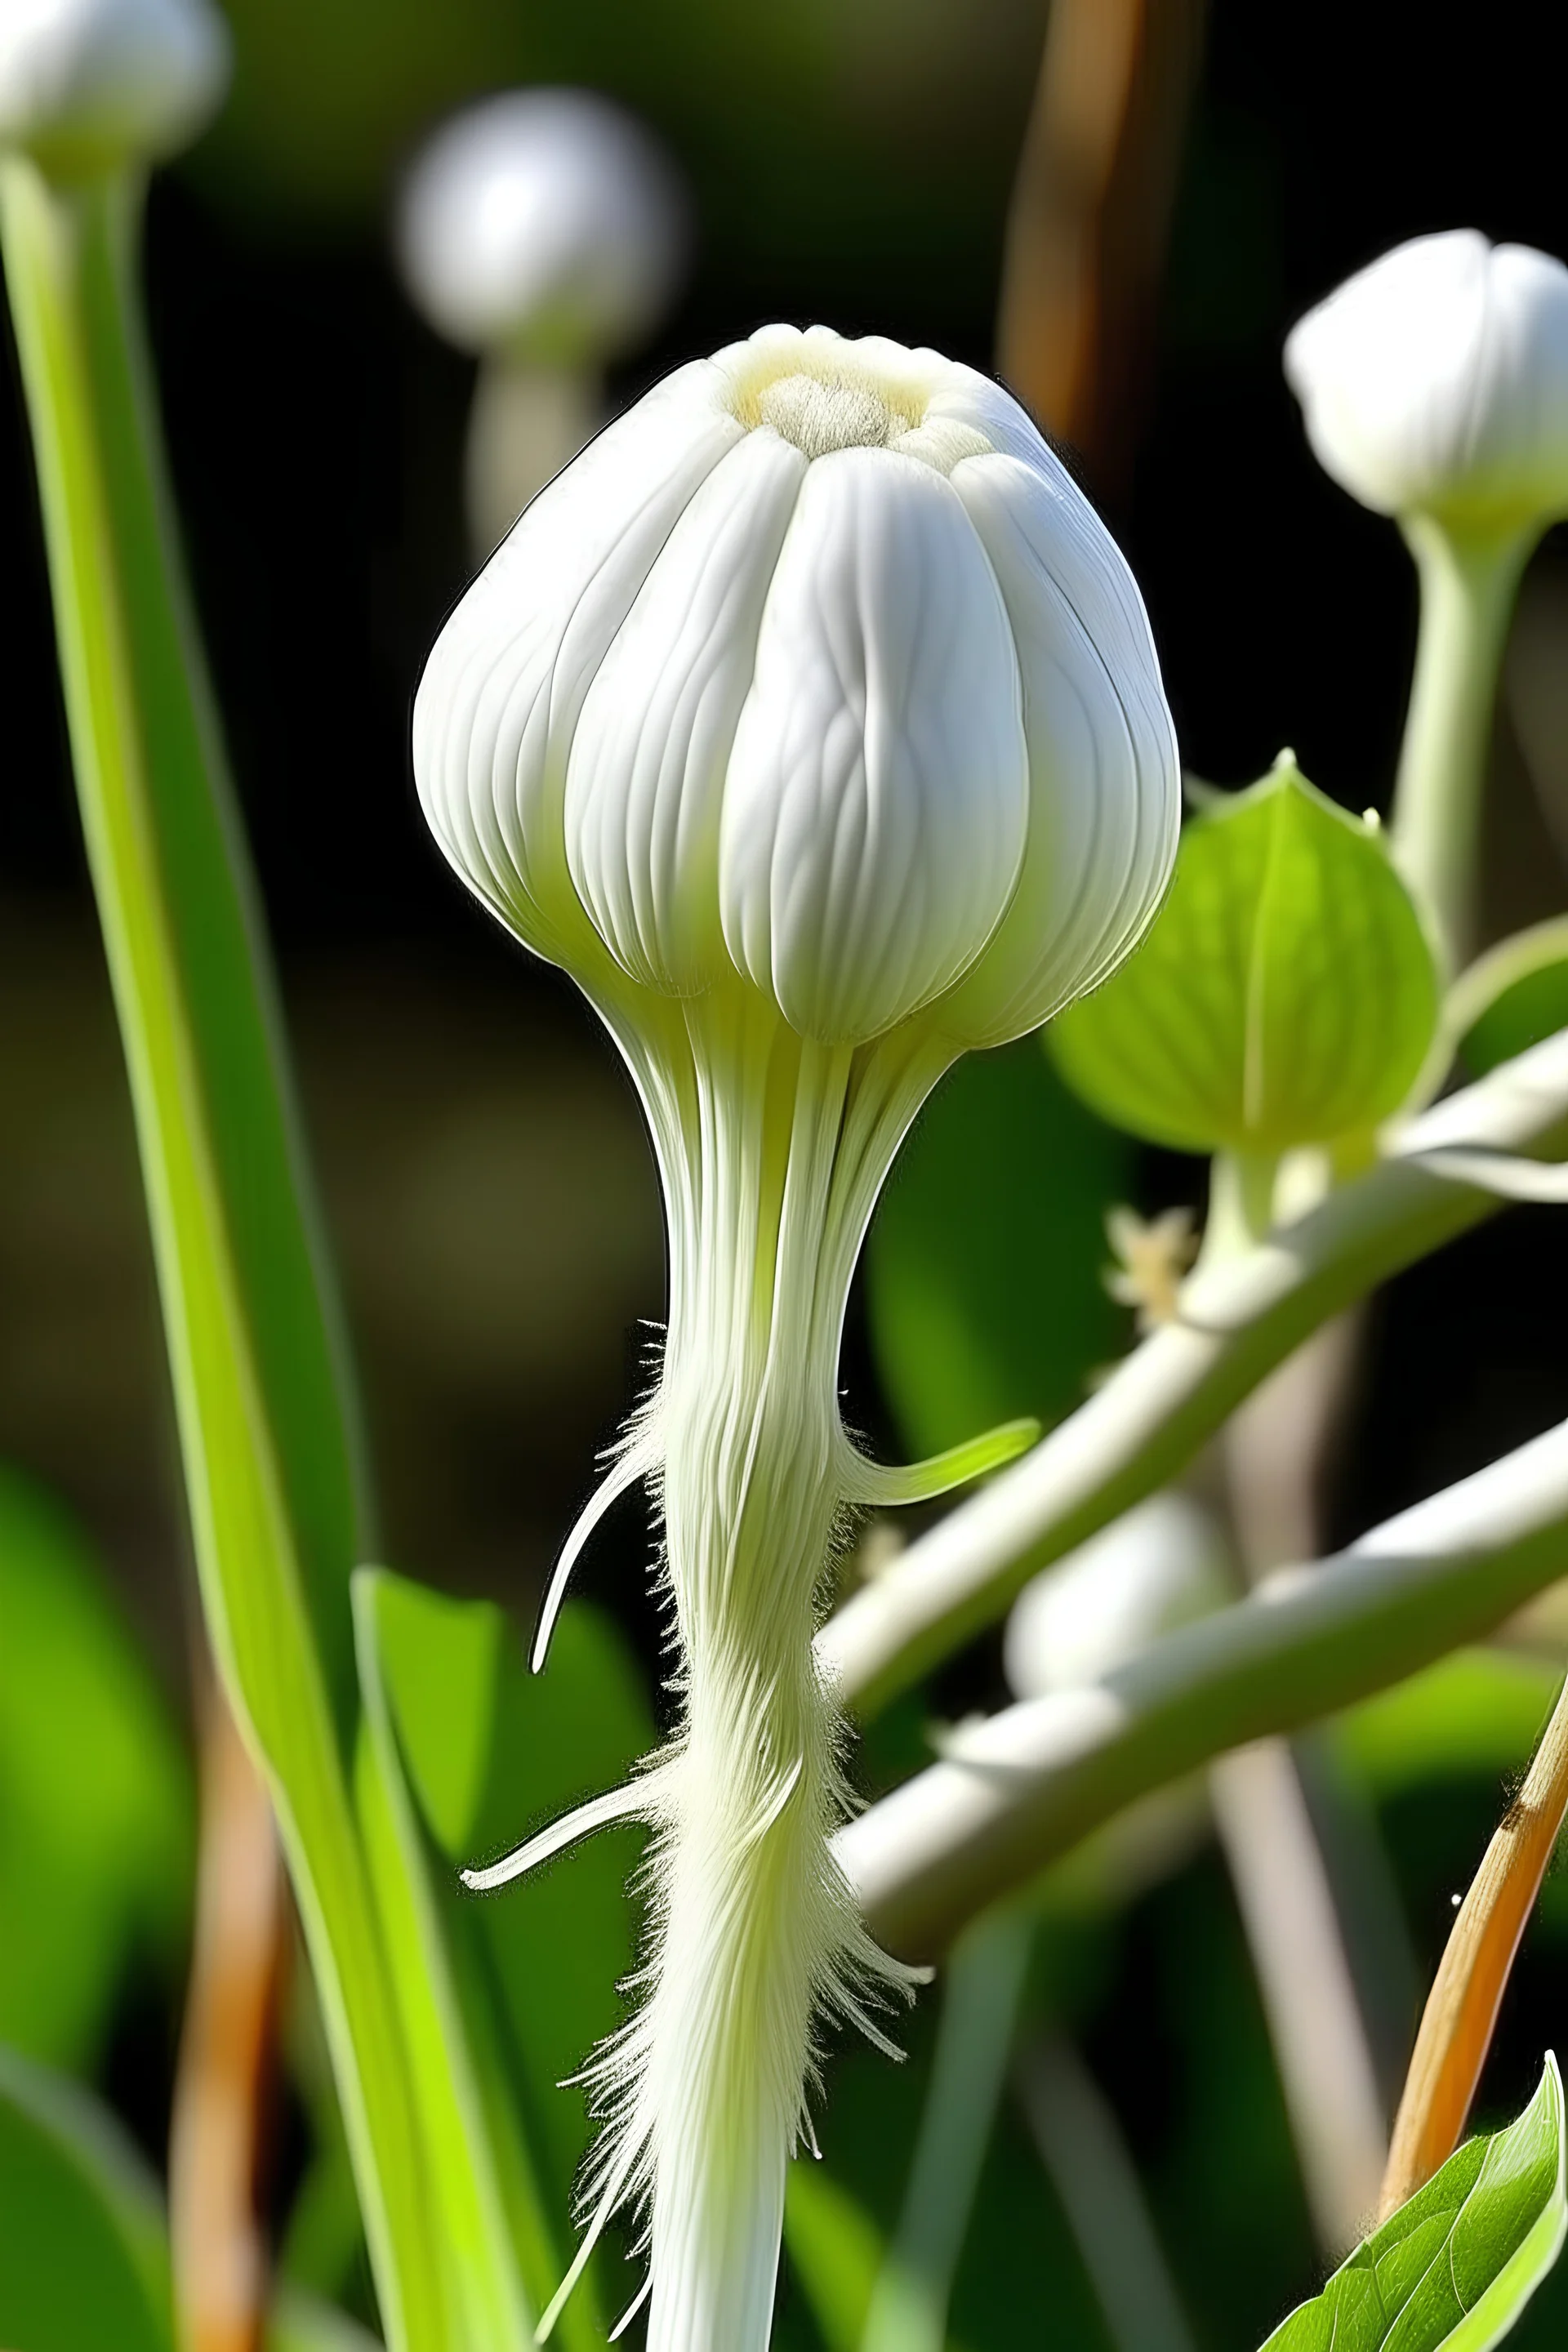 Mycetinis alliaceus or else is called Marasmius alliaceus, or commonly known as garlic parachute